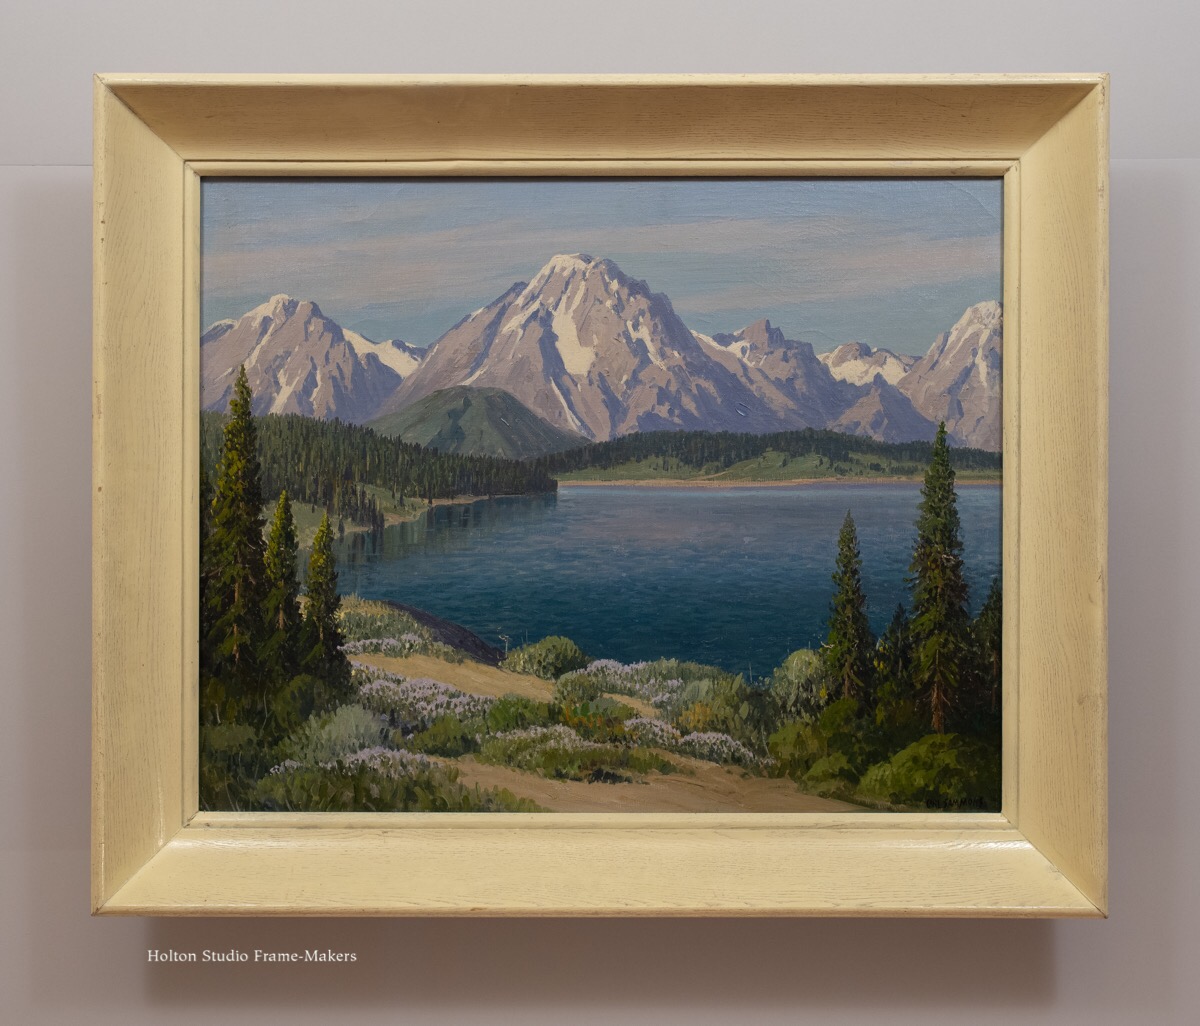 Carl Sammons painting in white frame